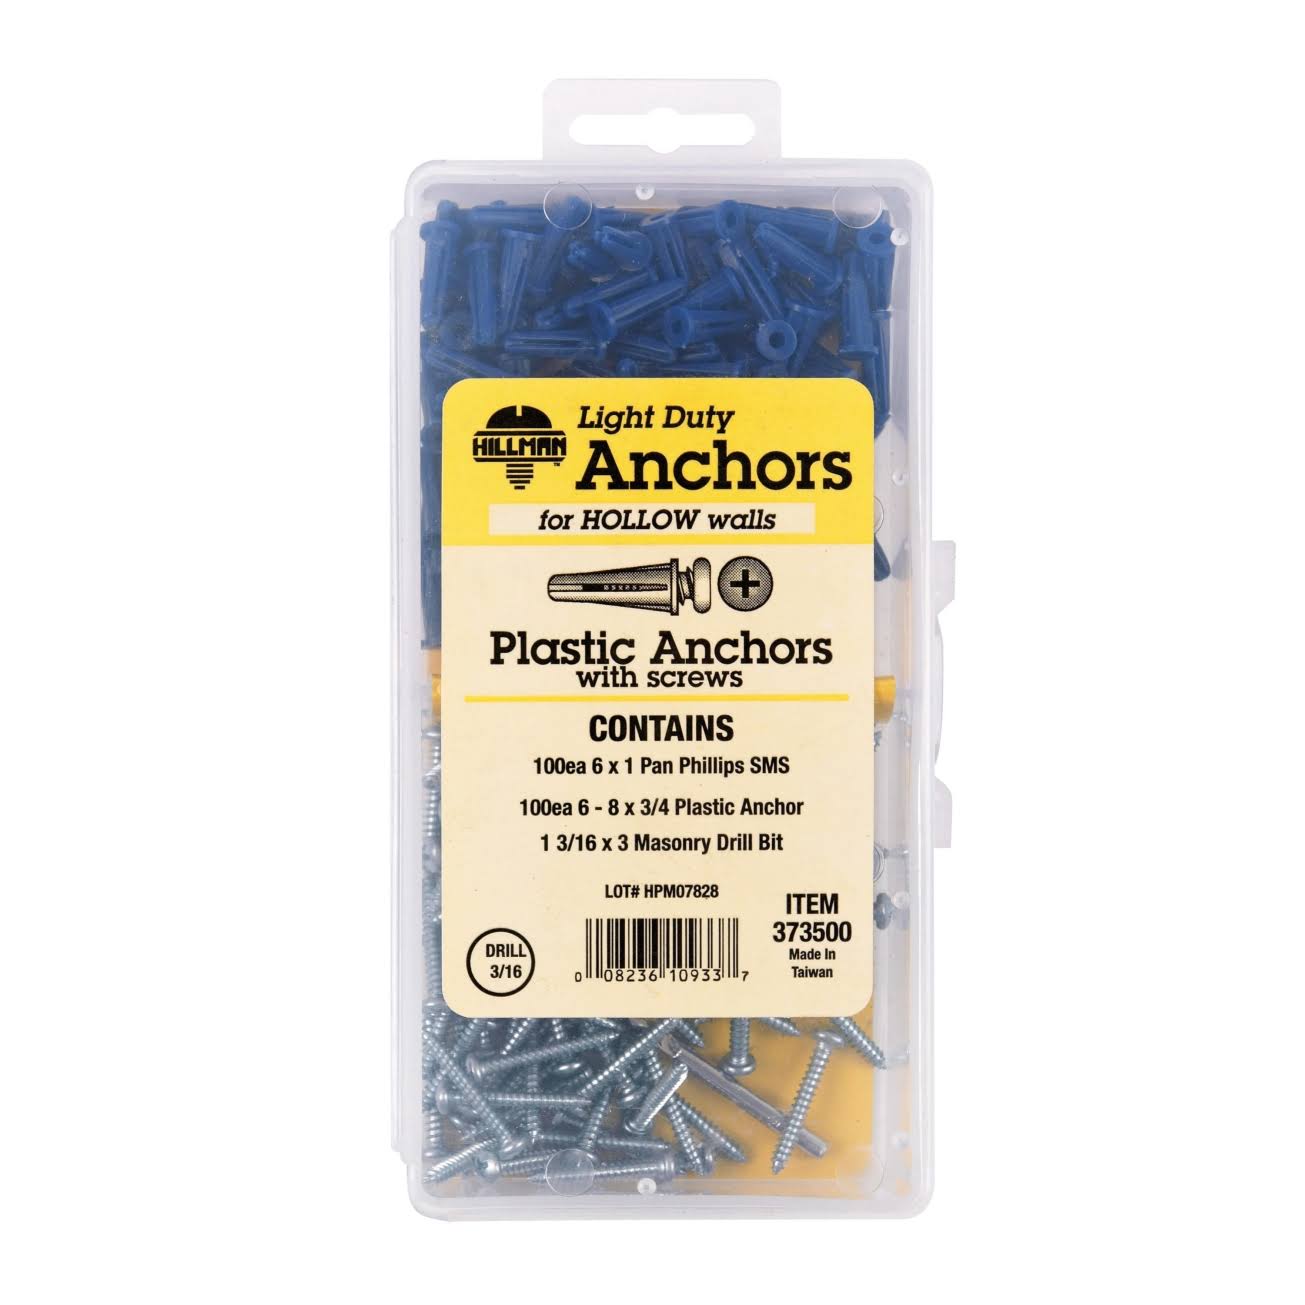 201-piece Plastic Wall Anchors Kit, Hillman, 373500